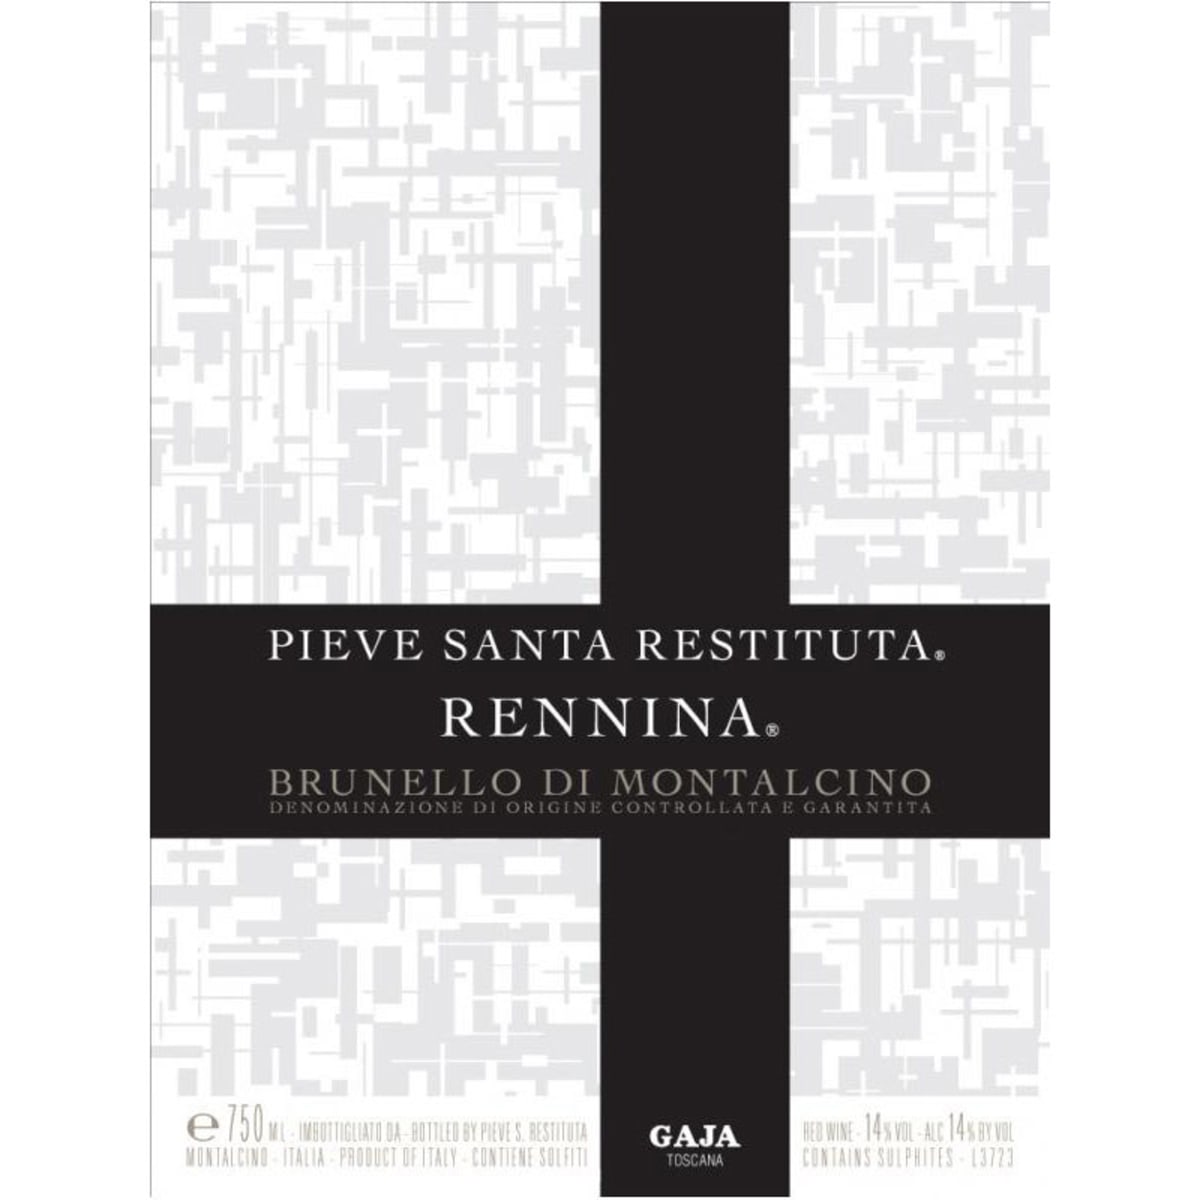 Gaja Pieve Santa Restituta Rennina Brunello di Montalcino 2010 Front Label